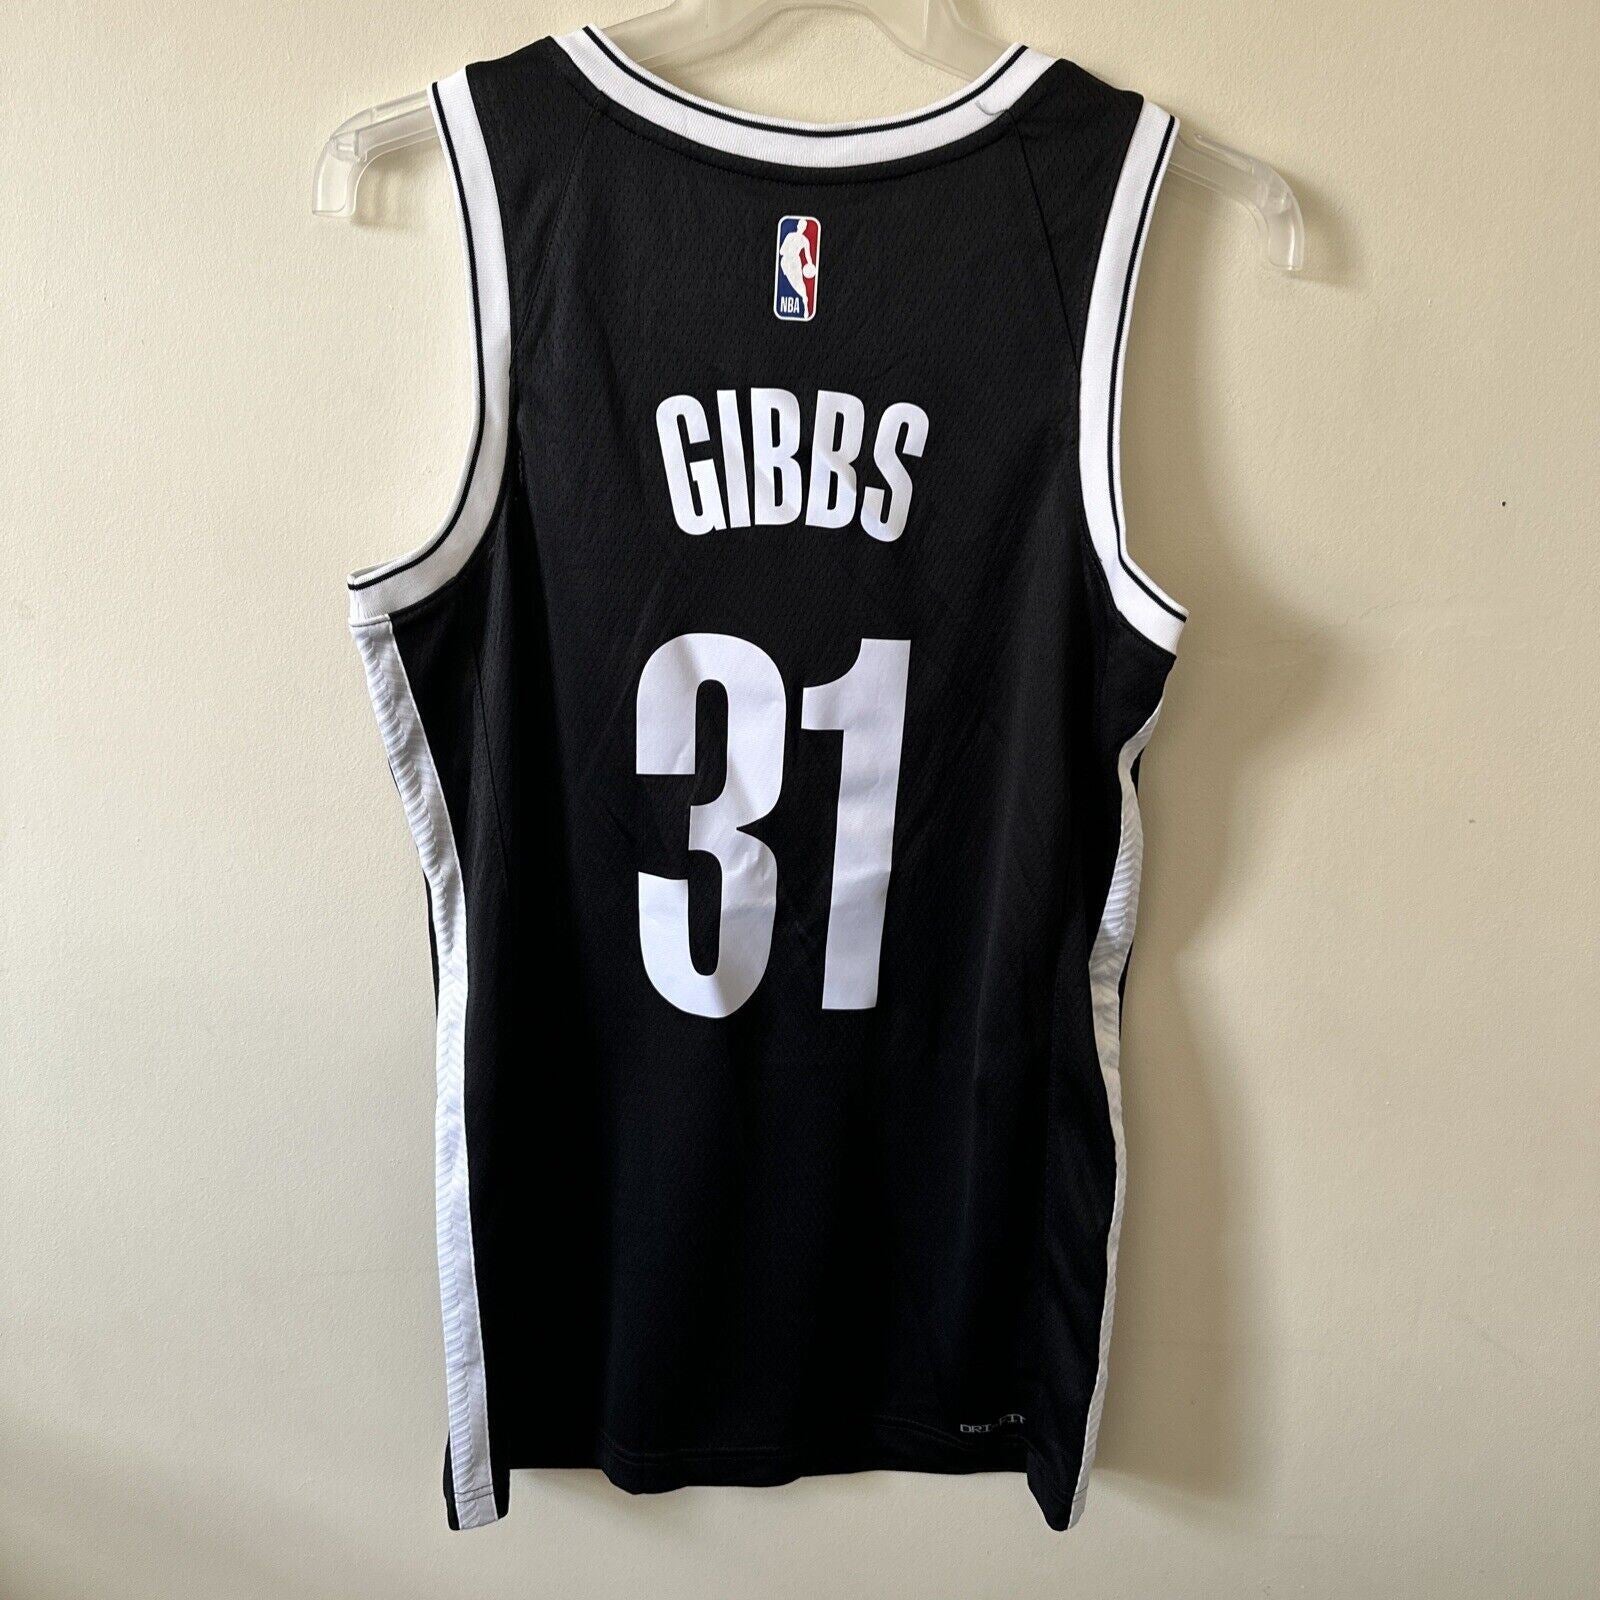 Nike NBA Brooklyn Nets Swingman Edition Jersey GIBBS 31 Men’s Small